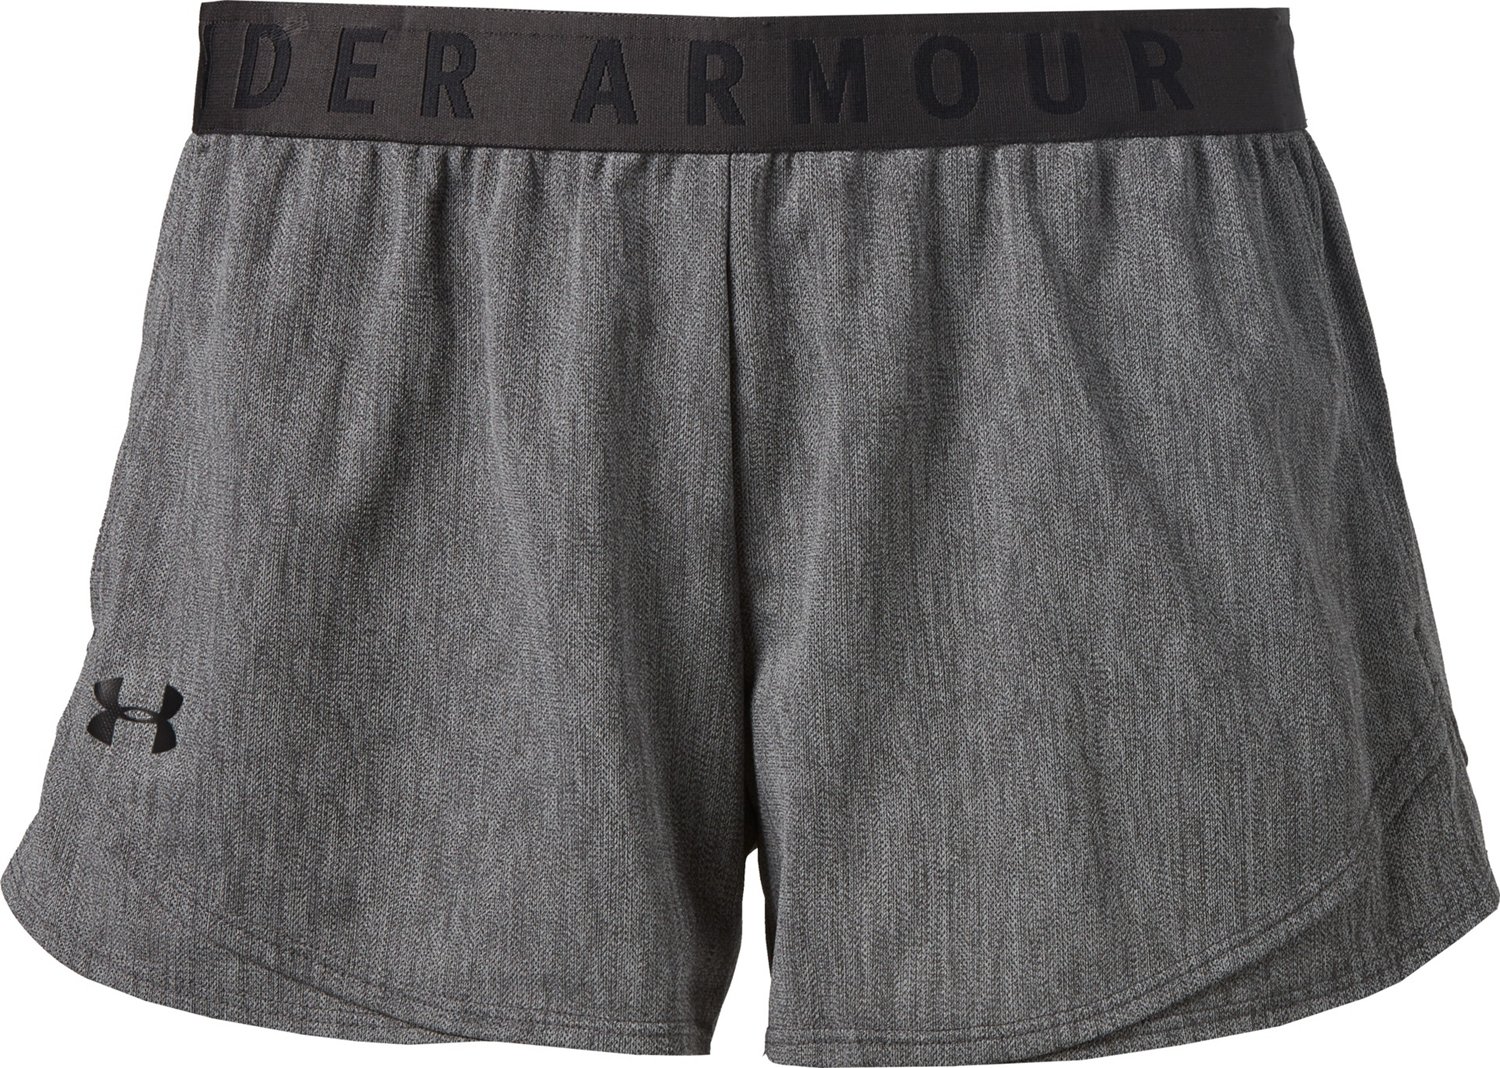 Women's Under Armour Shorts